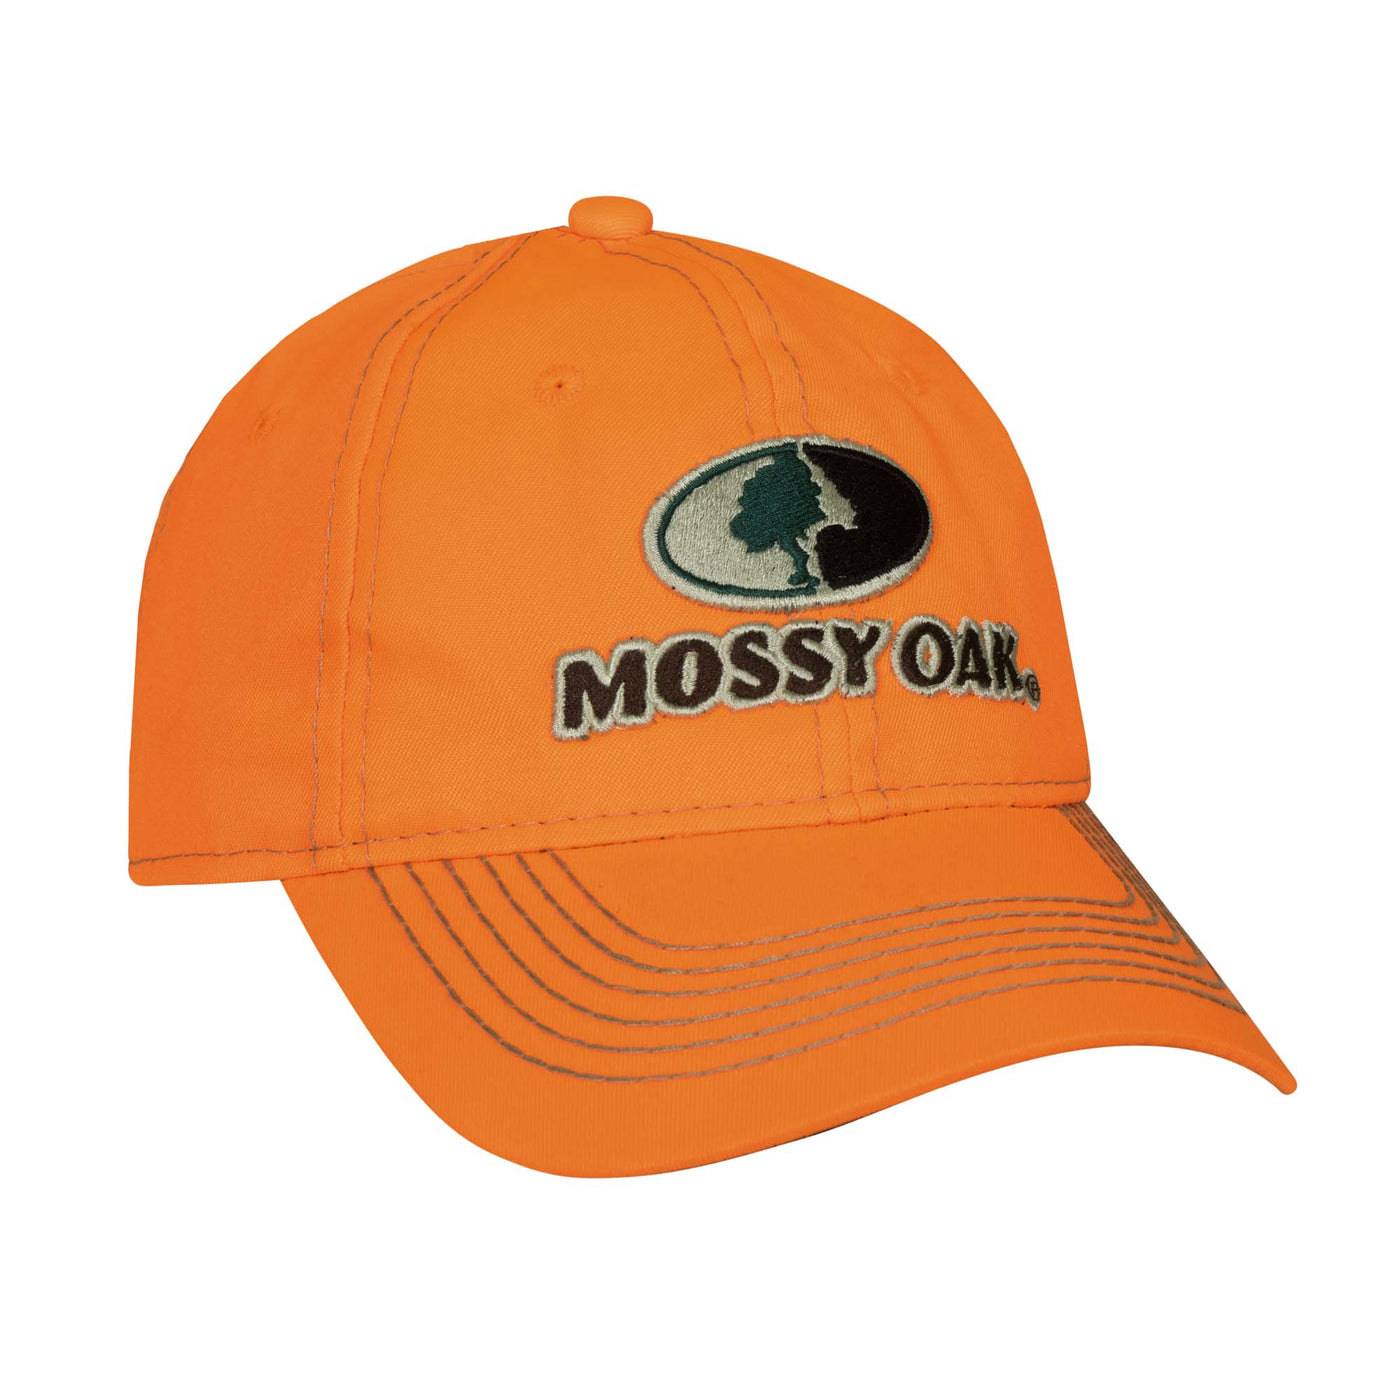 Mossy Oak Blaze Orange New Collection